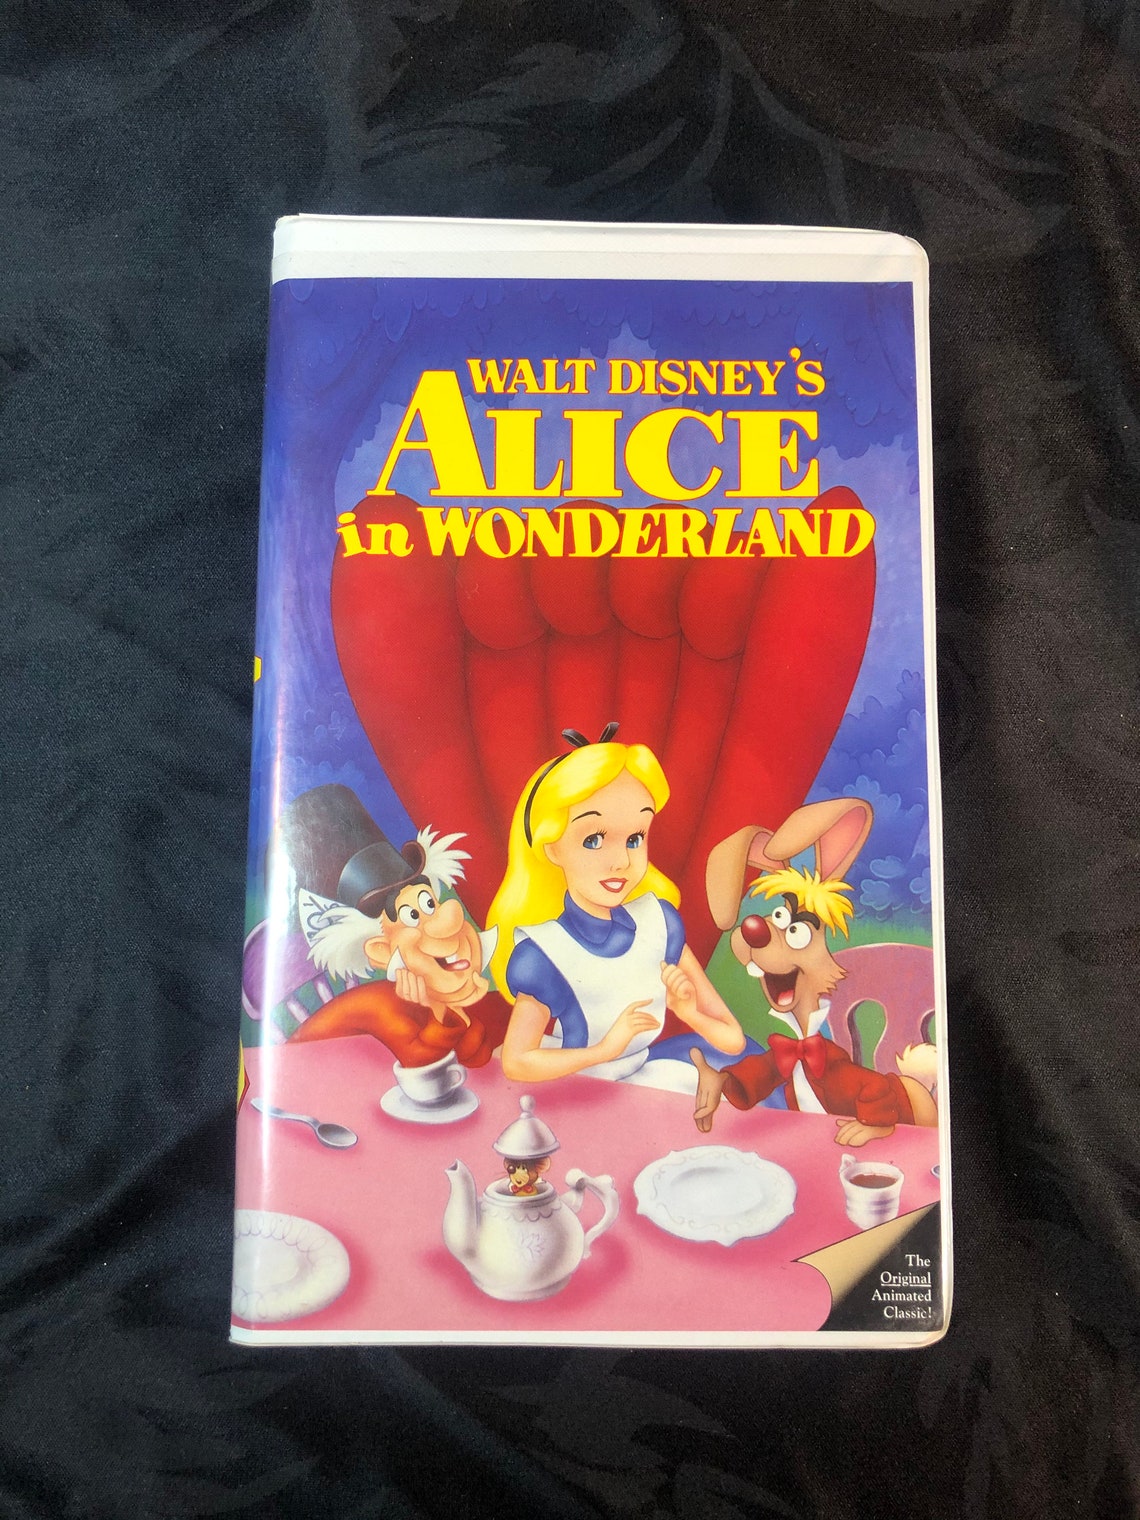 Black Diamond Alice in Wonderland VHS Tape | Etsy